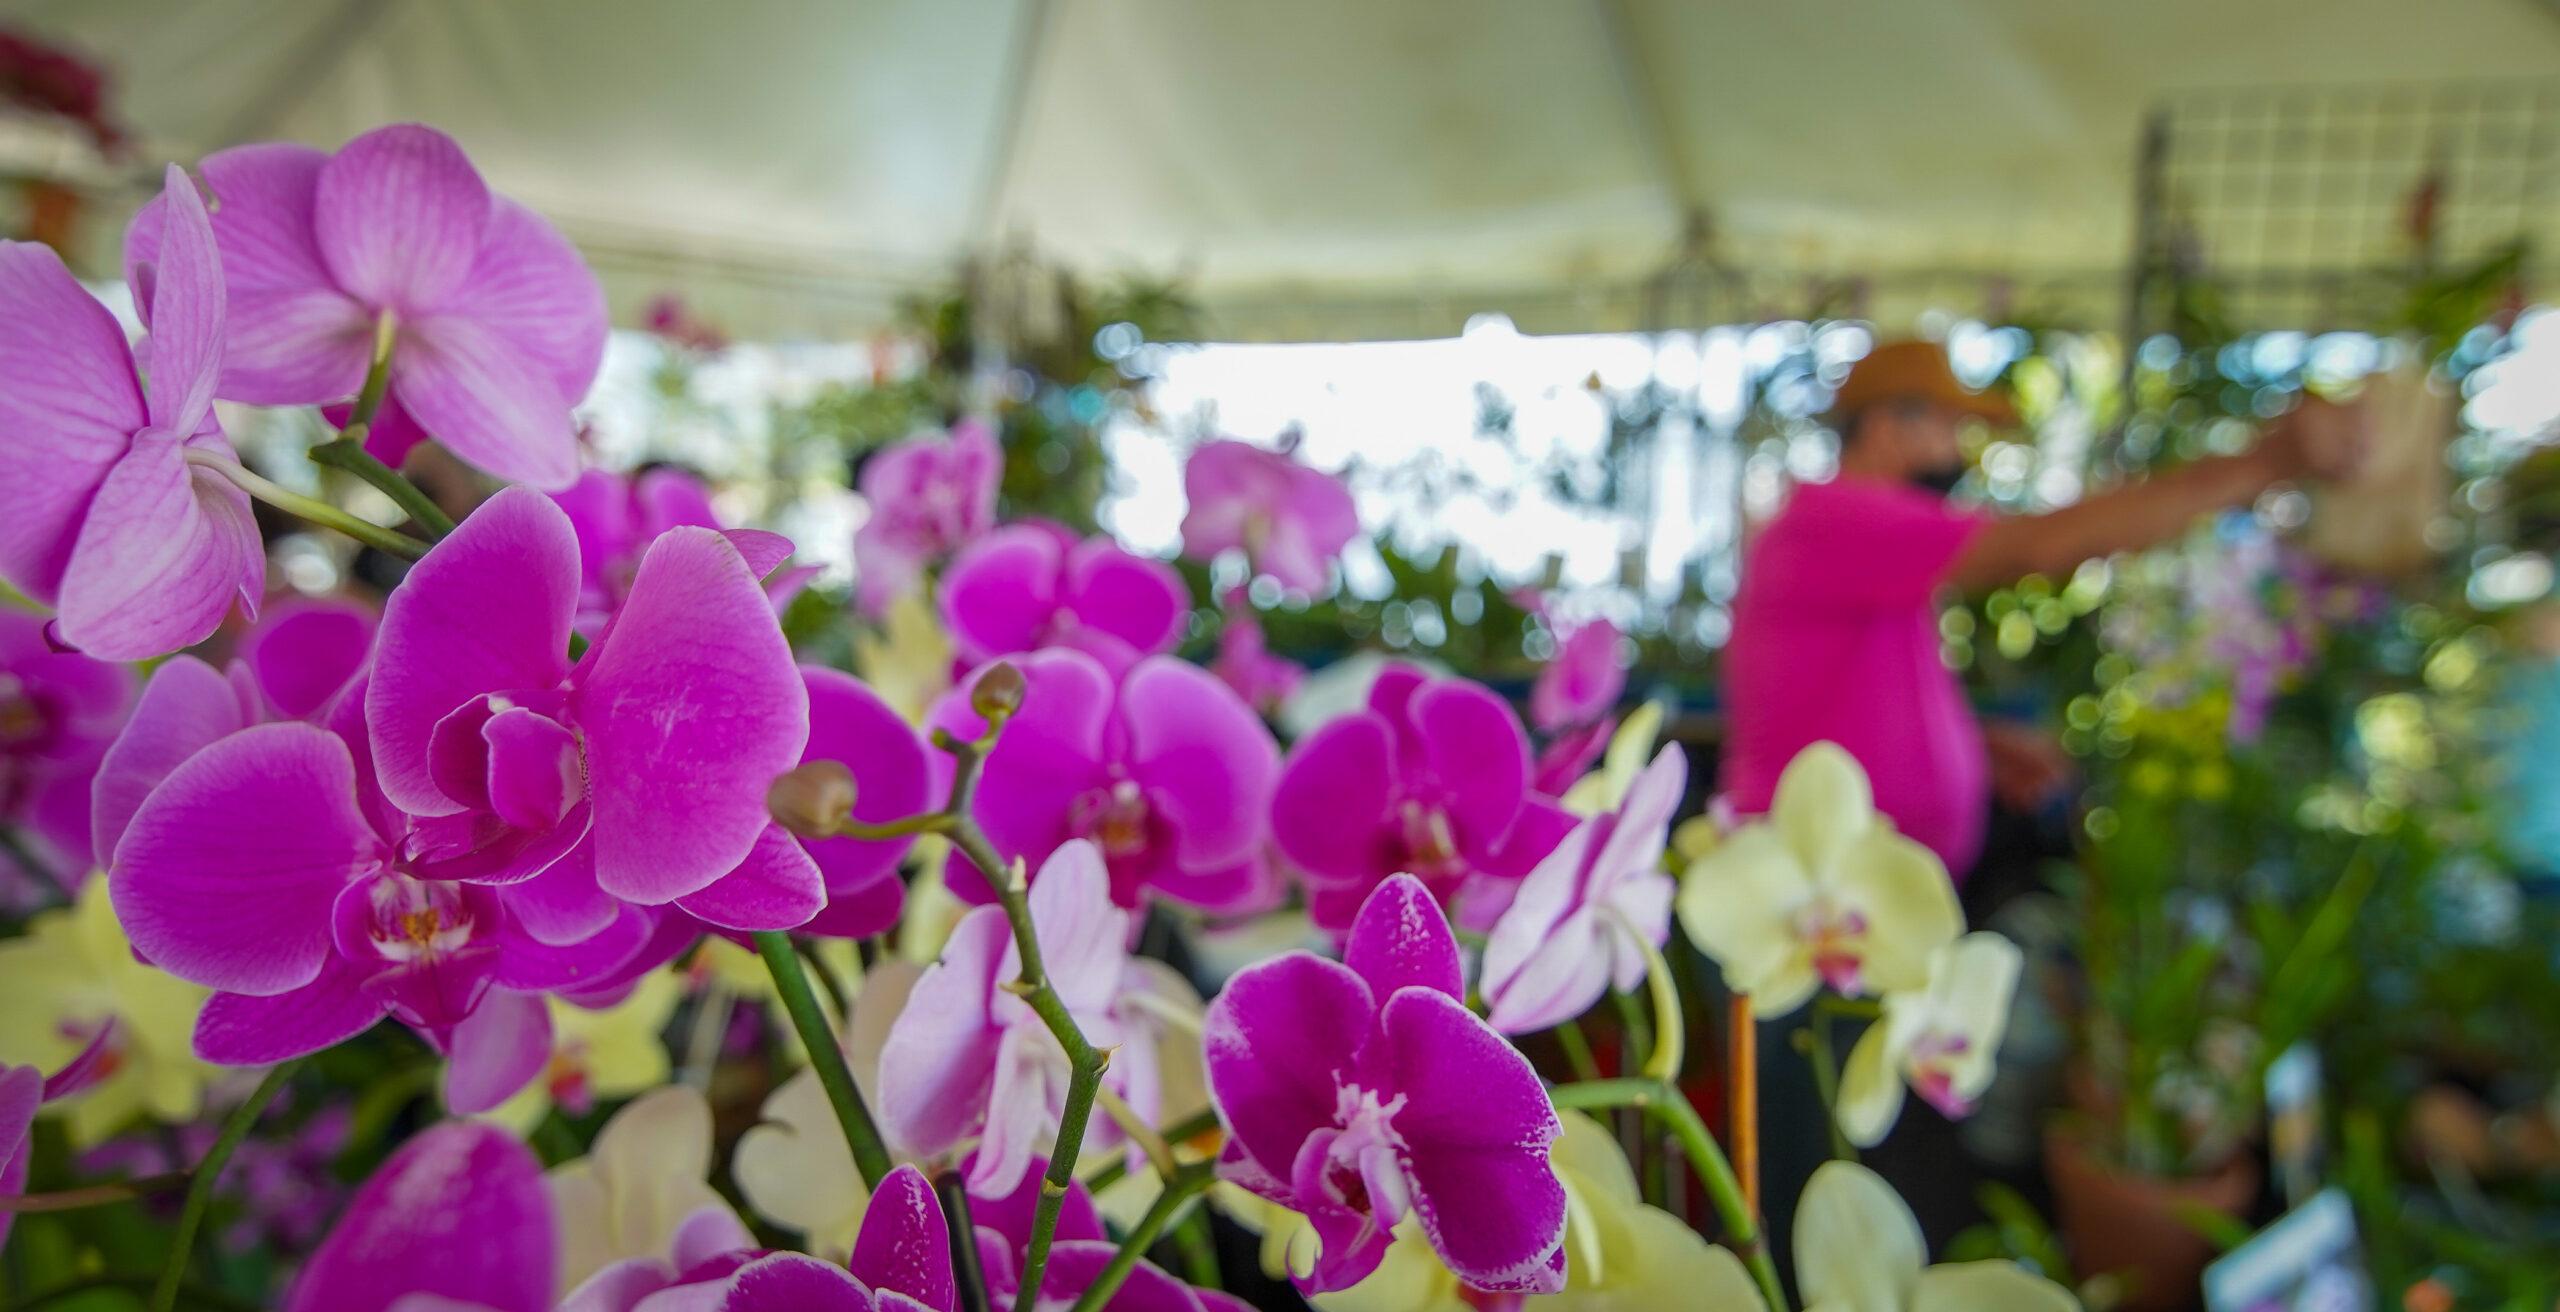 Cataño celebra el 7mo Festival de las Orquídeas este fin de semana 